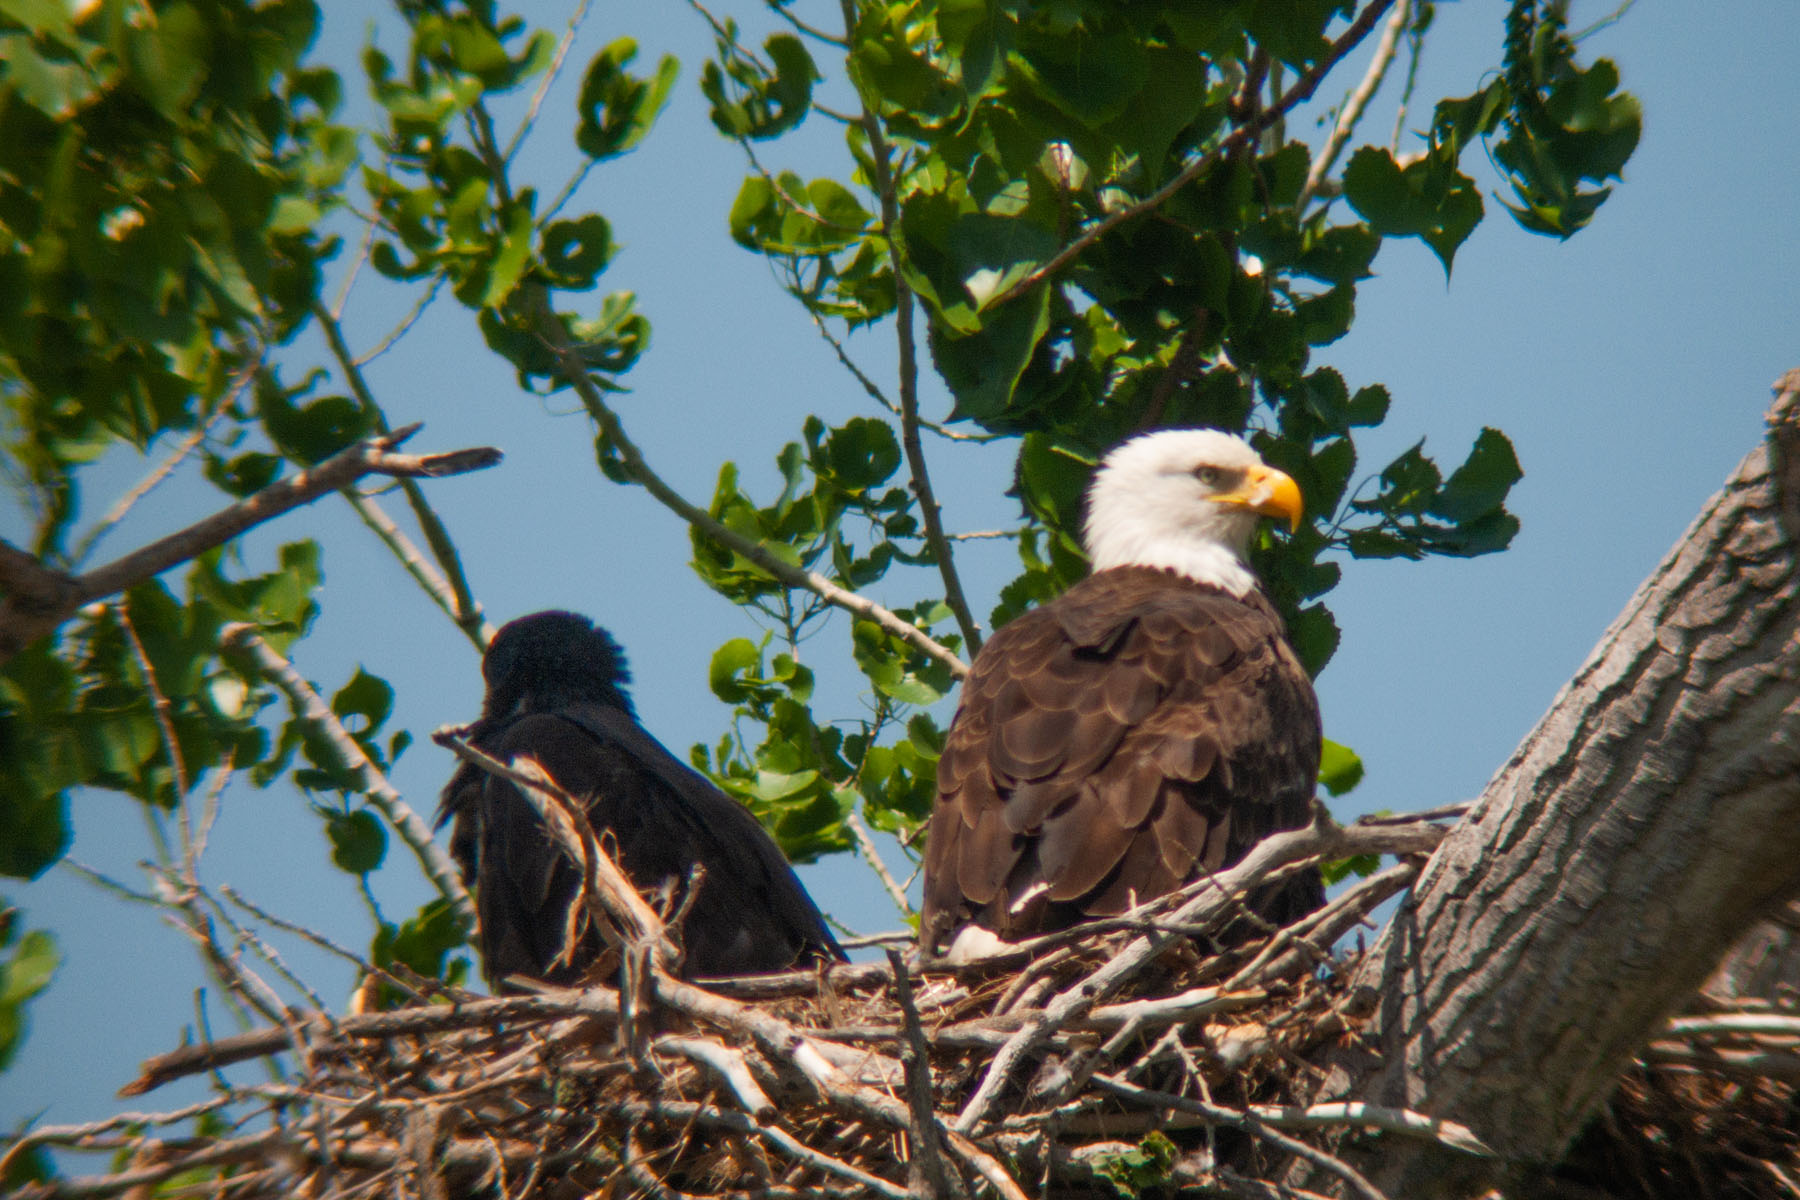 Eagles nest, Squaw Creek NWR, Missouri.  Digiscoped.  Click for next photo.